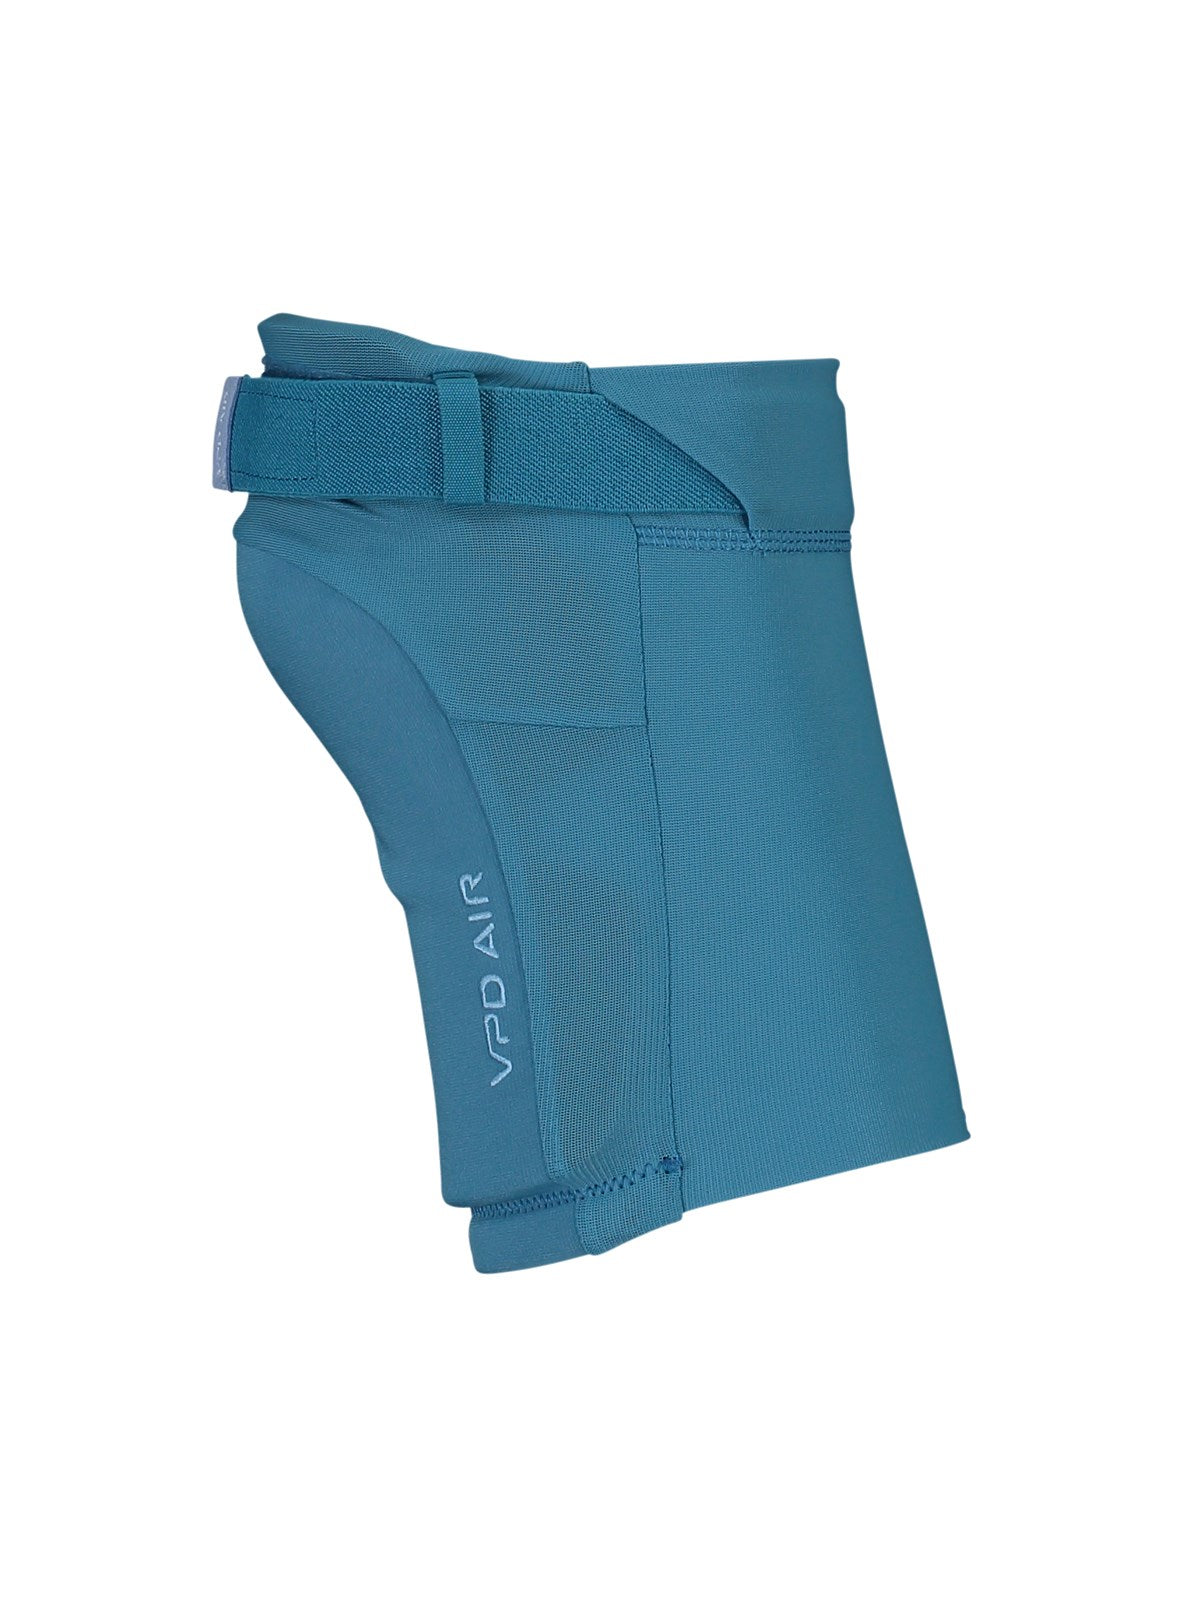 Ochraniacze na kolana POC JOINT VPD AIR - Basalt Blue